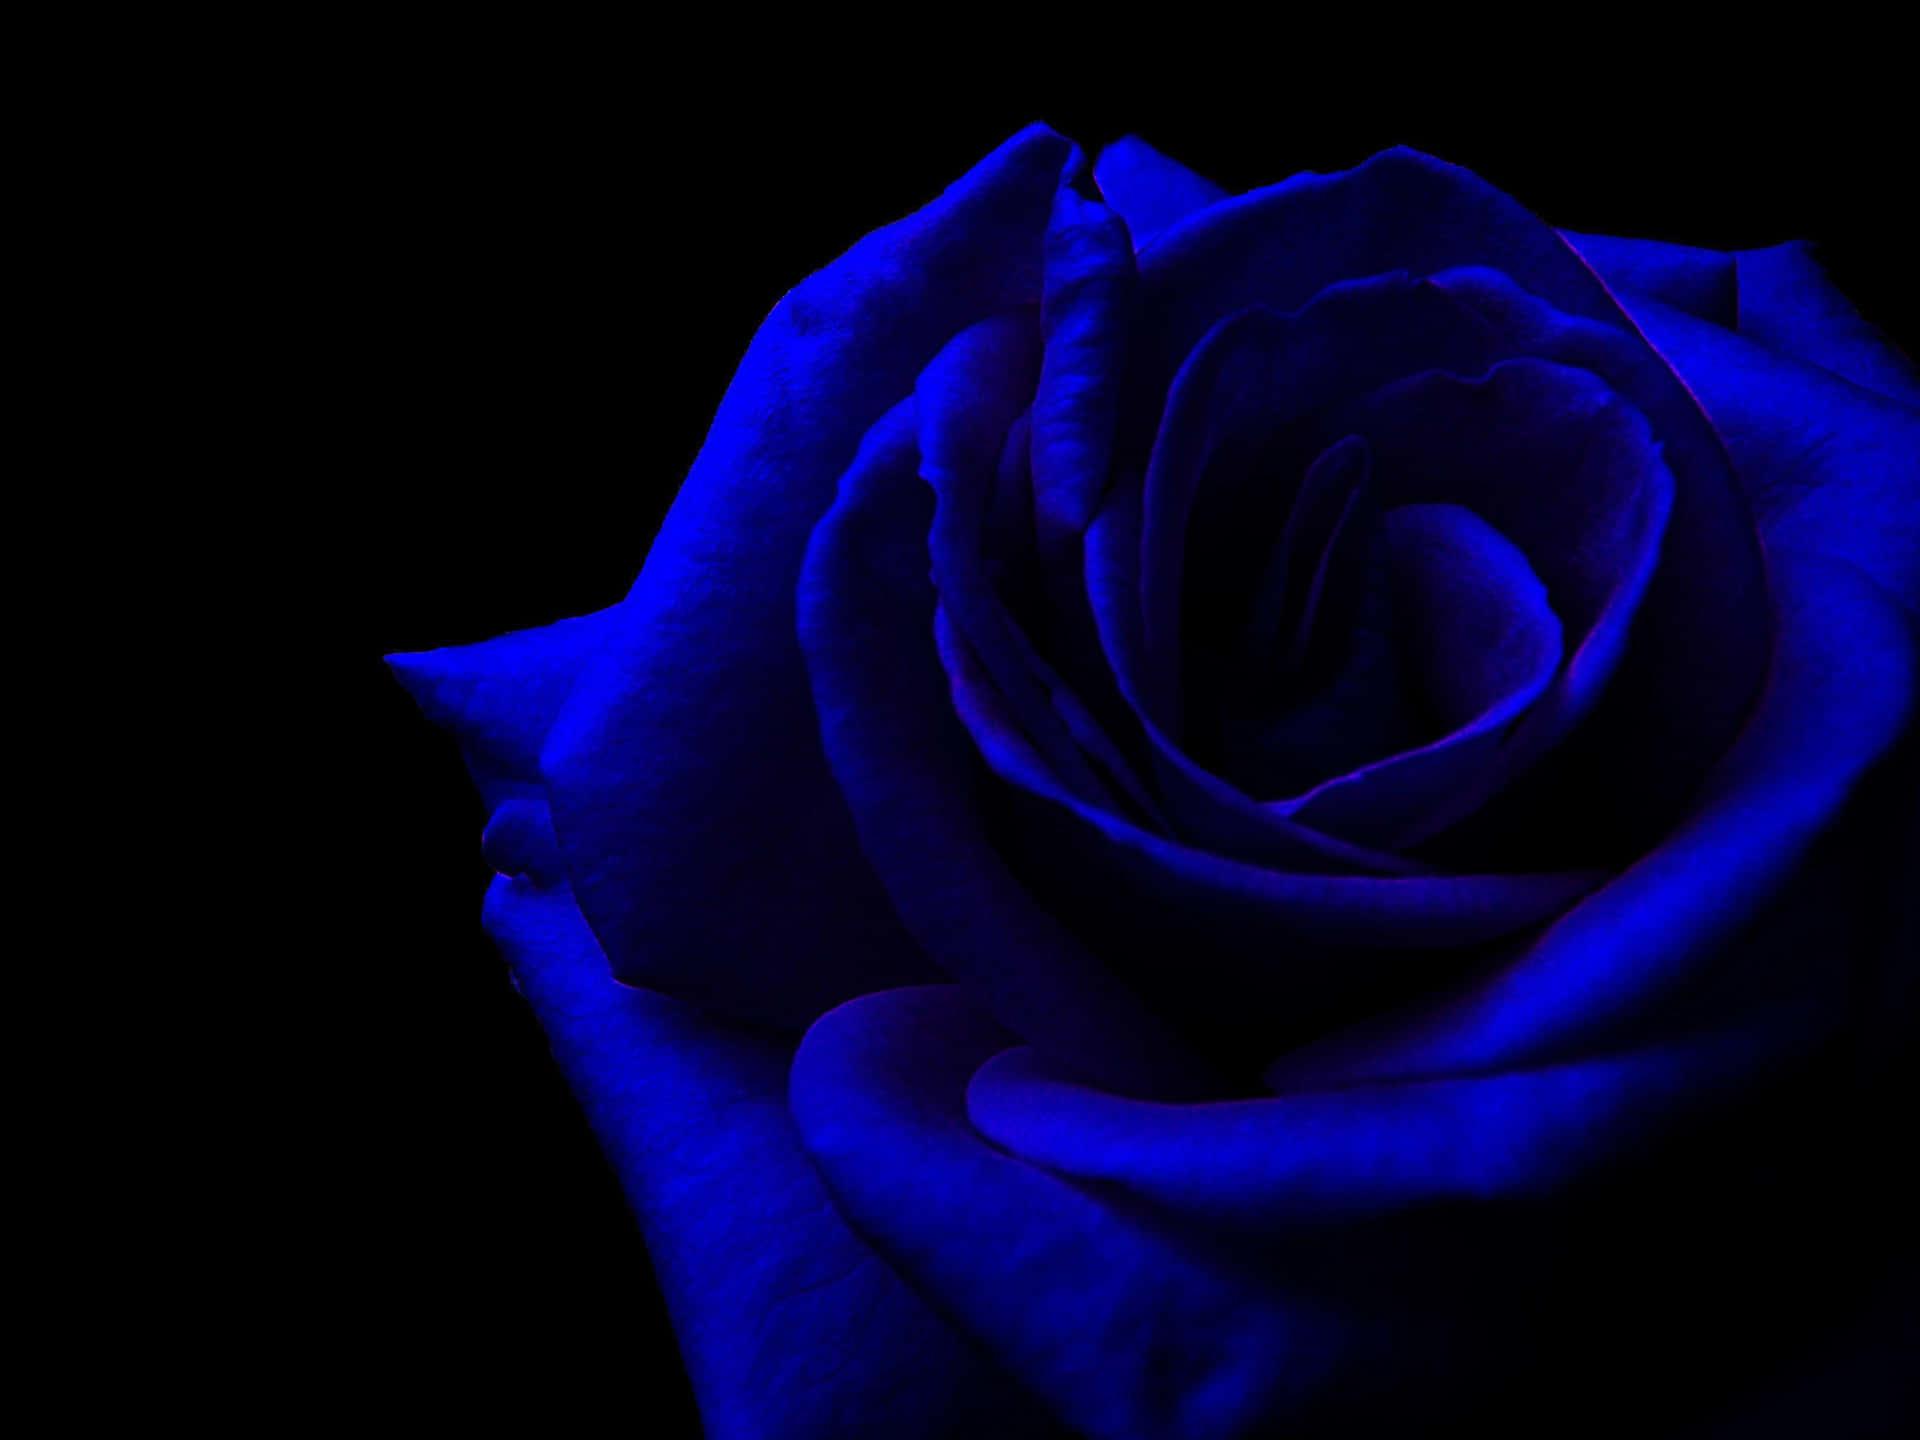 Dark Blue Rose Wallpapers - Top Free Dark Blue Rose Backgrounds ...